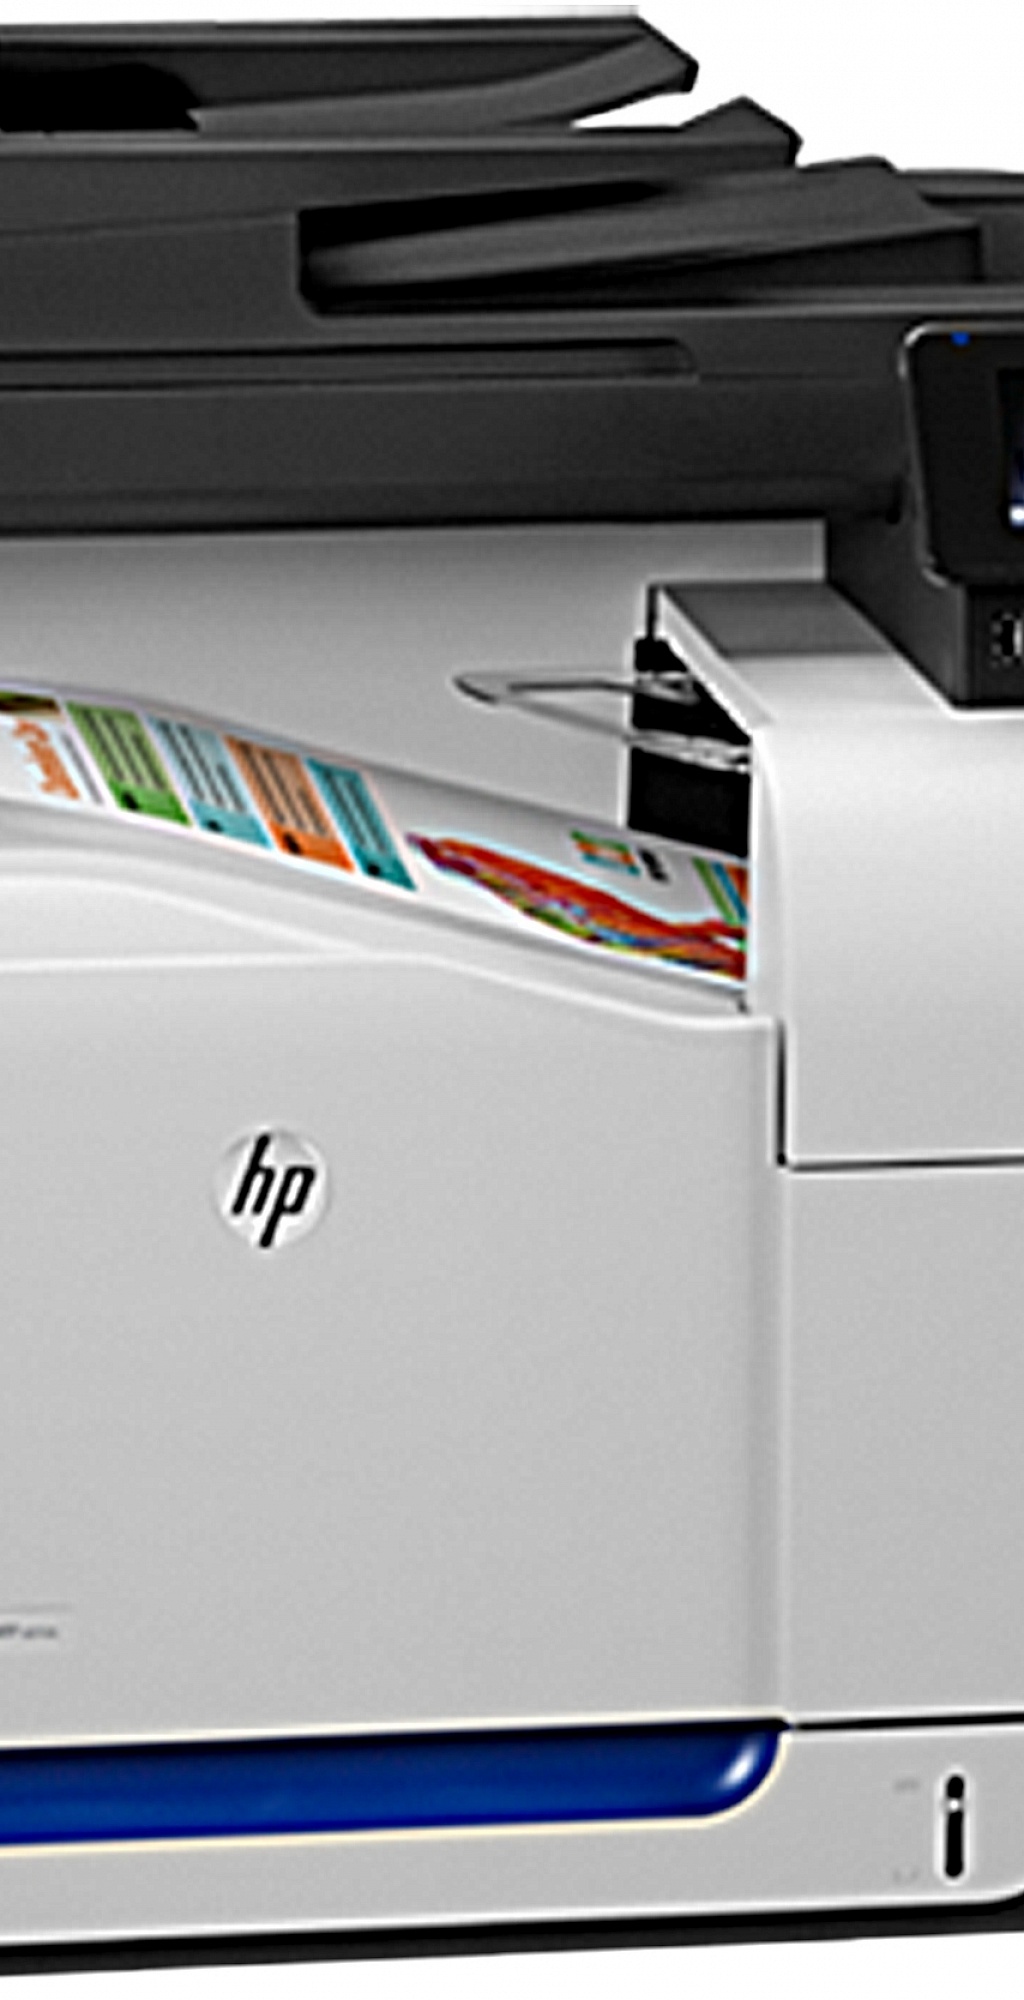 МФУ HP Color LaserJet Pro 500 M570dn